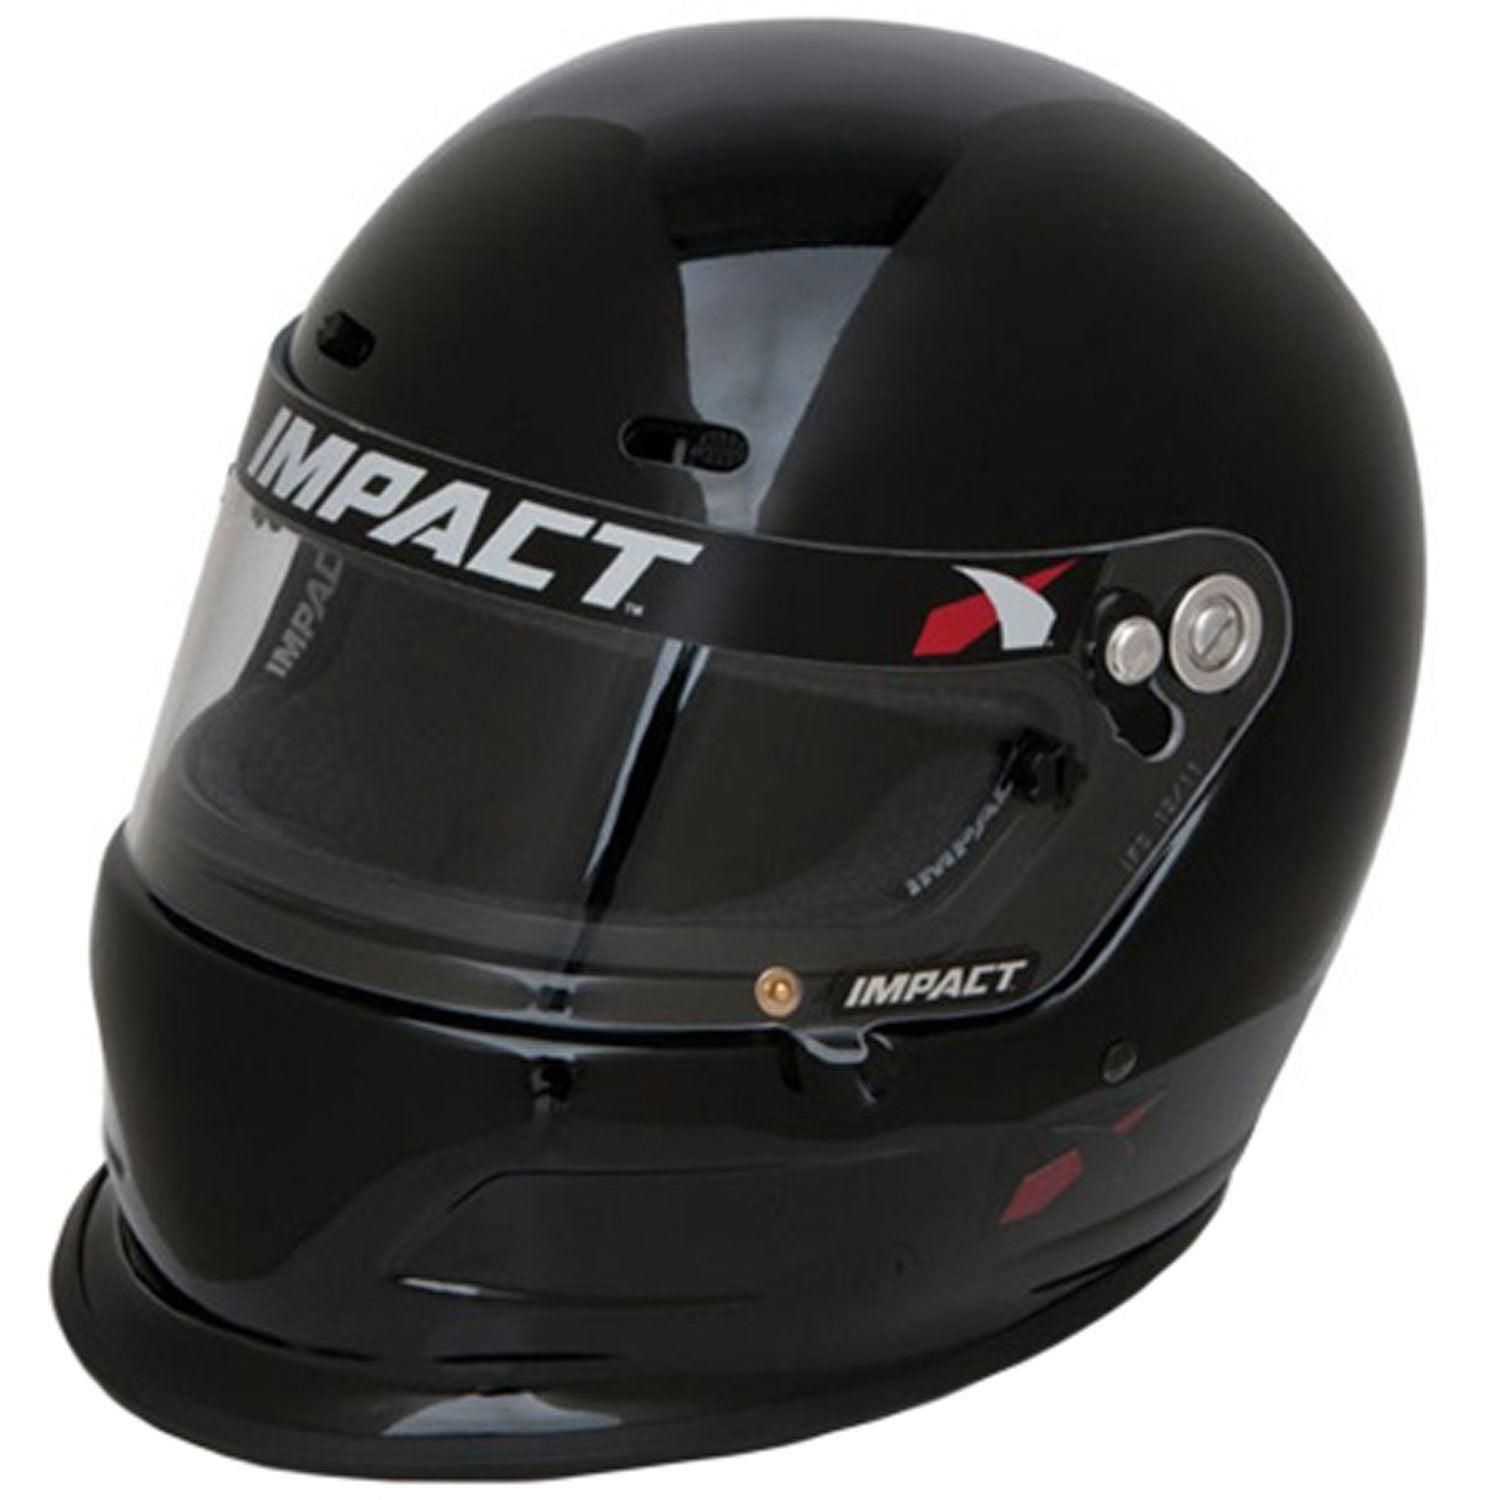 Helmet Charger X-Large Black SA2020 - Burlile Performance Products